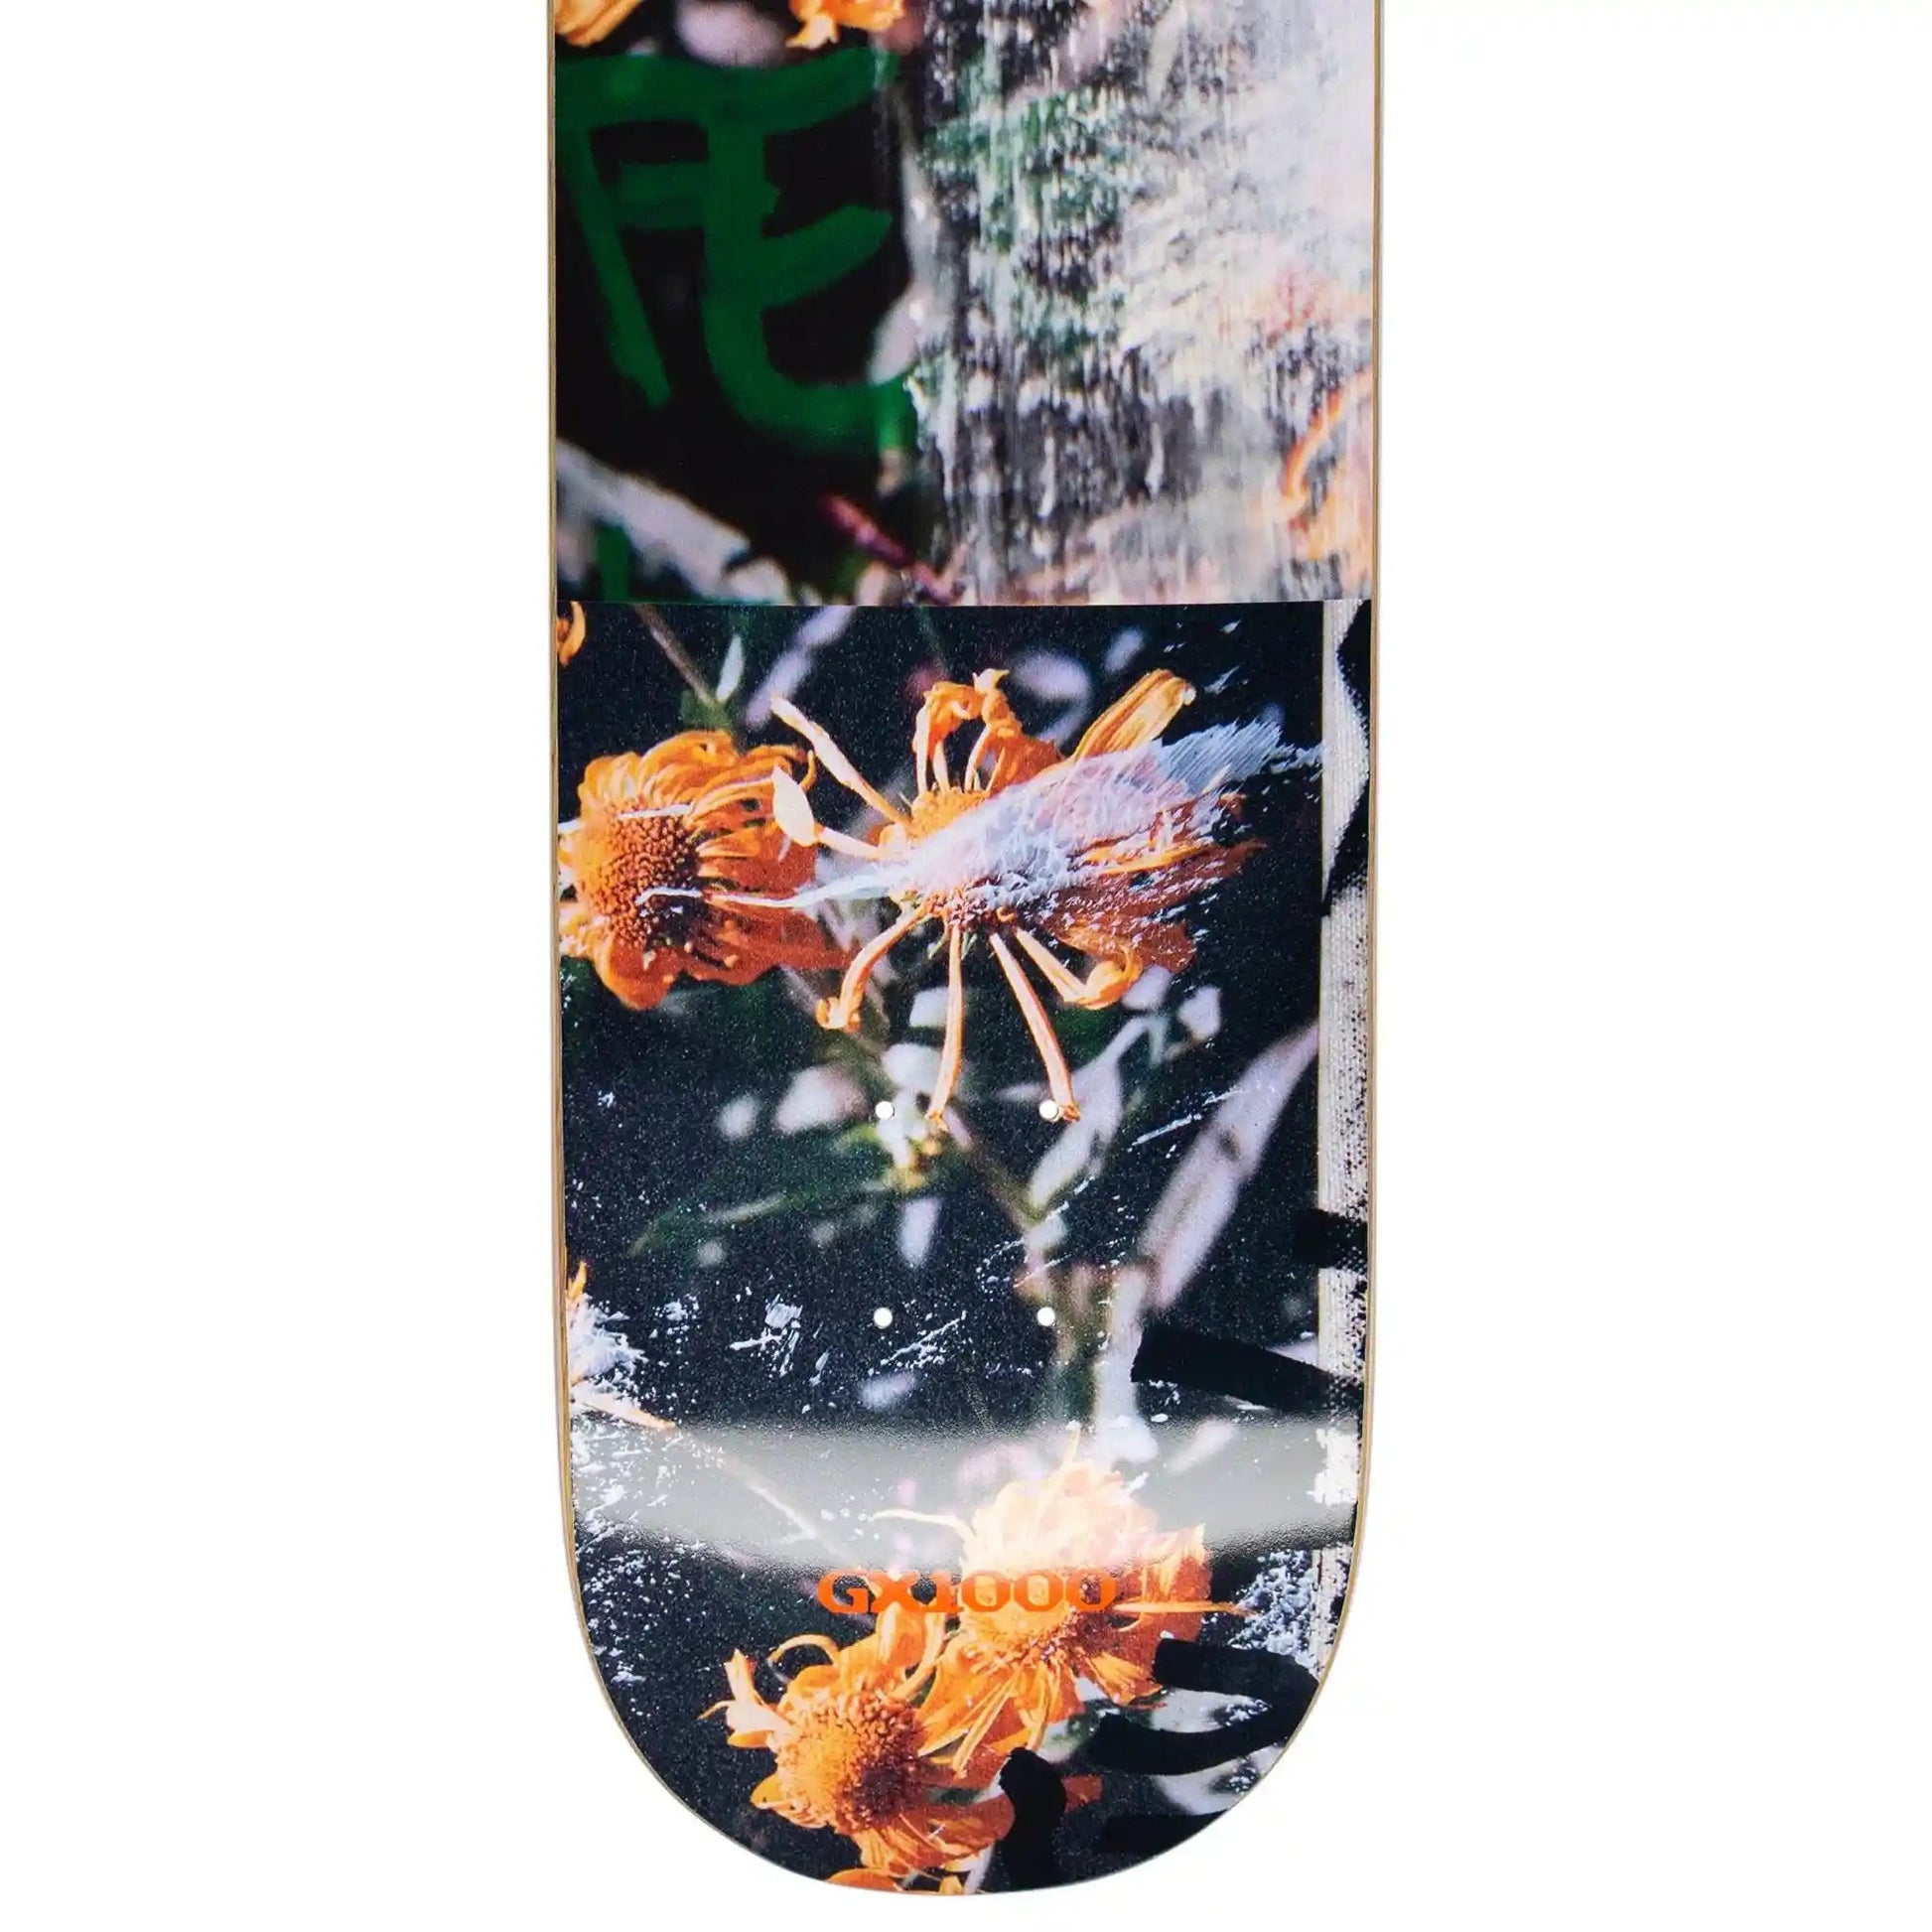 GX1000 Flowers Deck (8.5") - Tiki Room Skateboards - 2